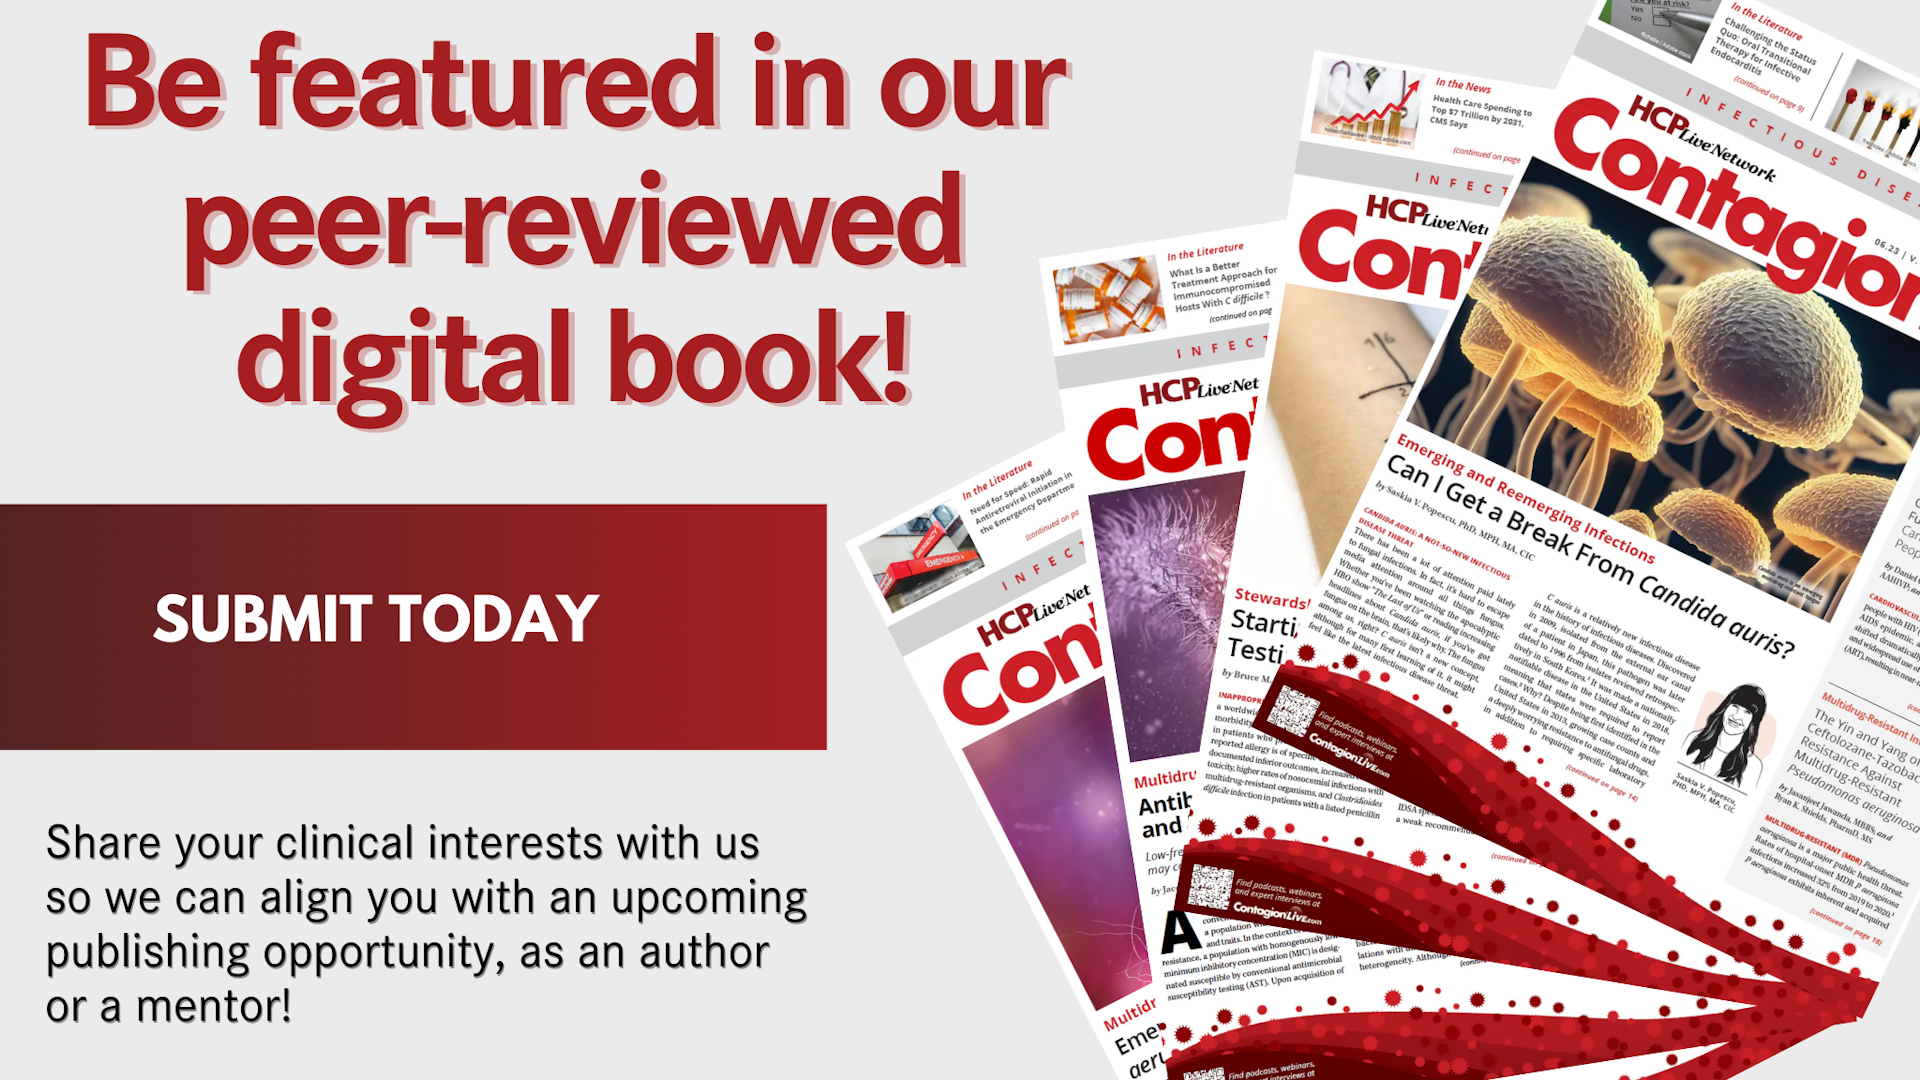 Contribute to Contagion's Digital Book!